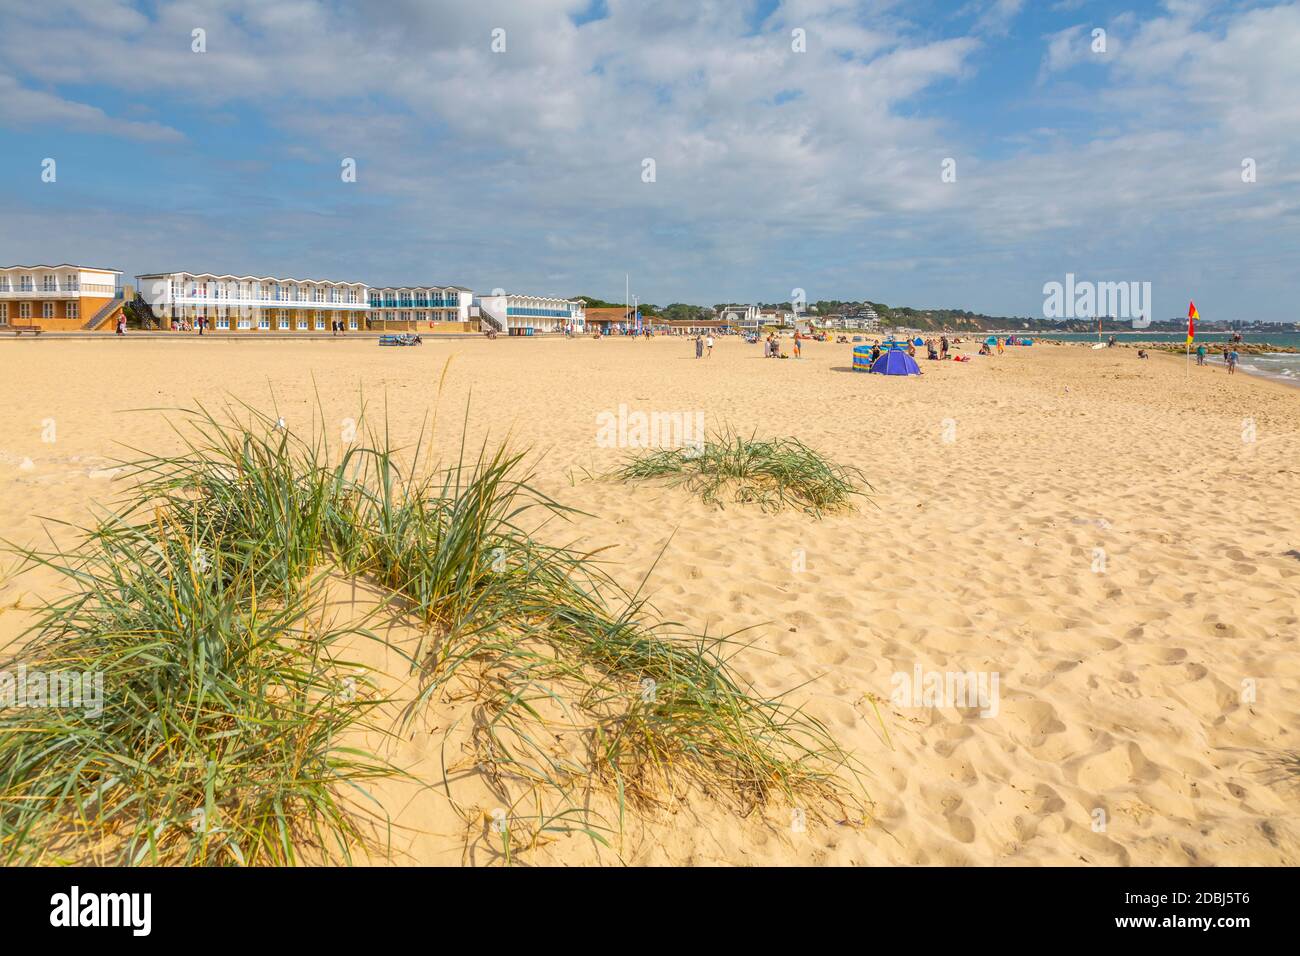 View of beach huts overlooking Sandbanks Beach in Poole Bay, Poole, Dorset, England, United Kingdom, Europe Stock Photo